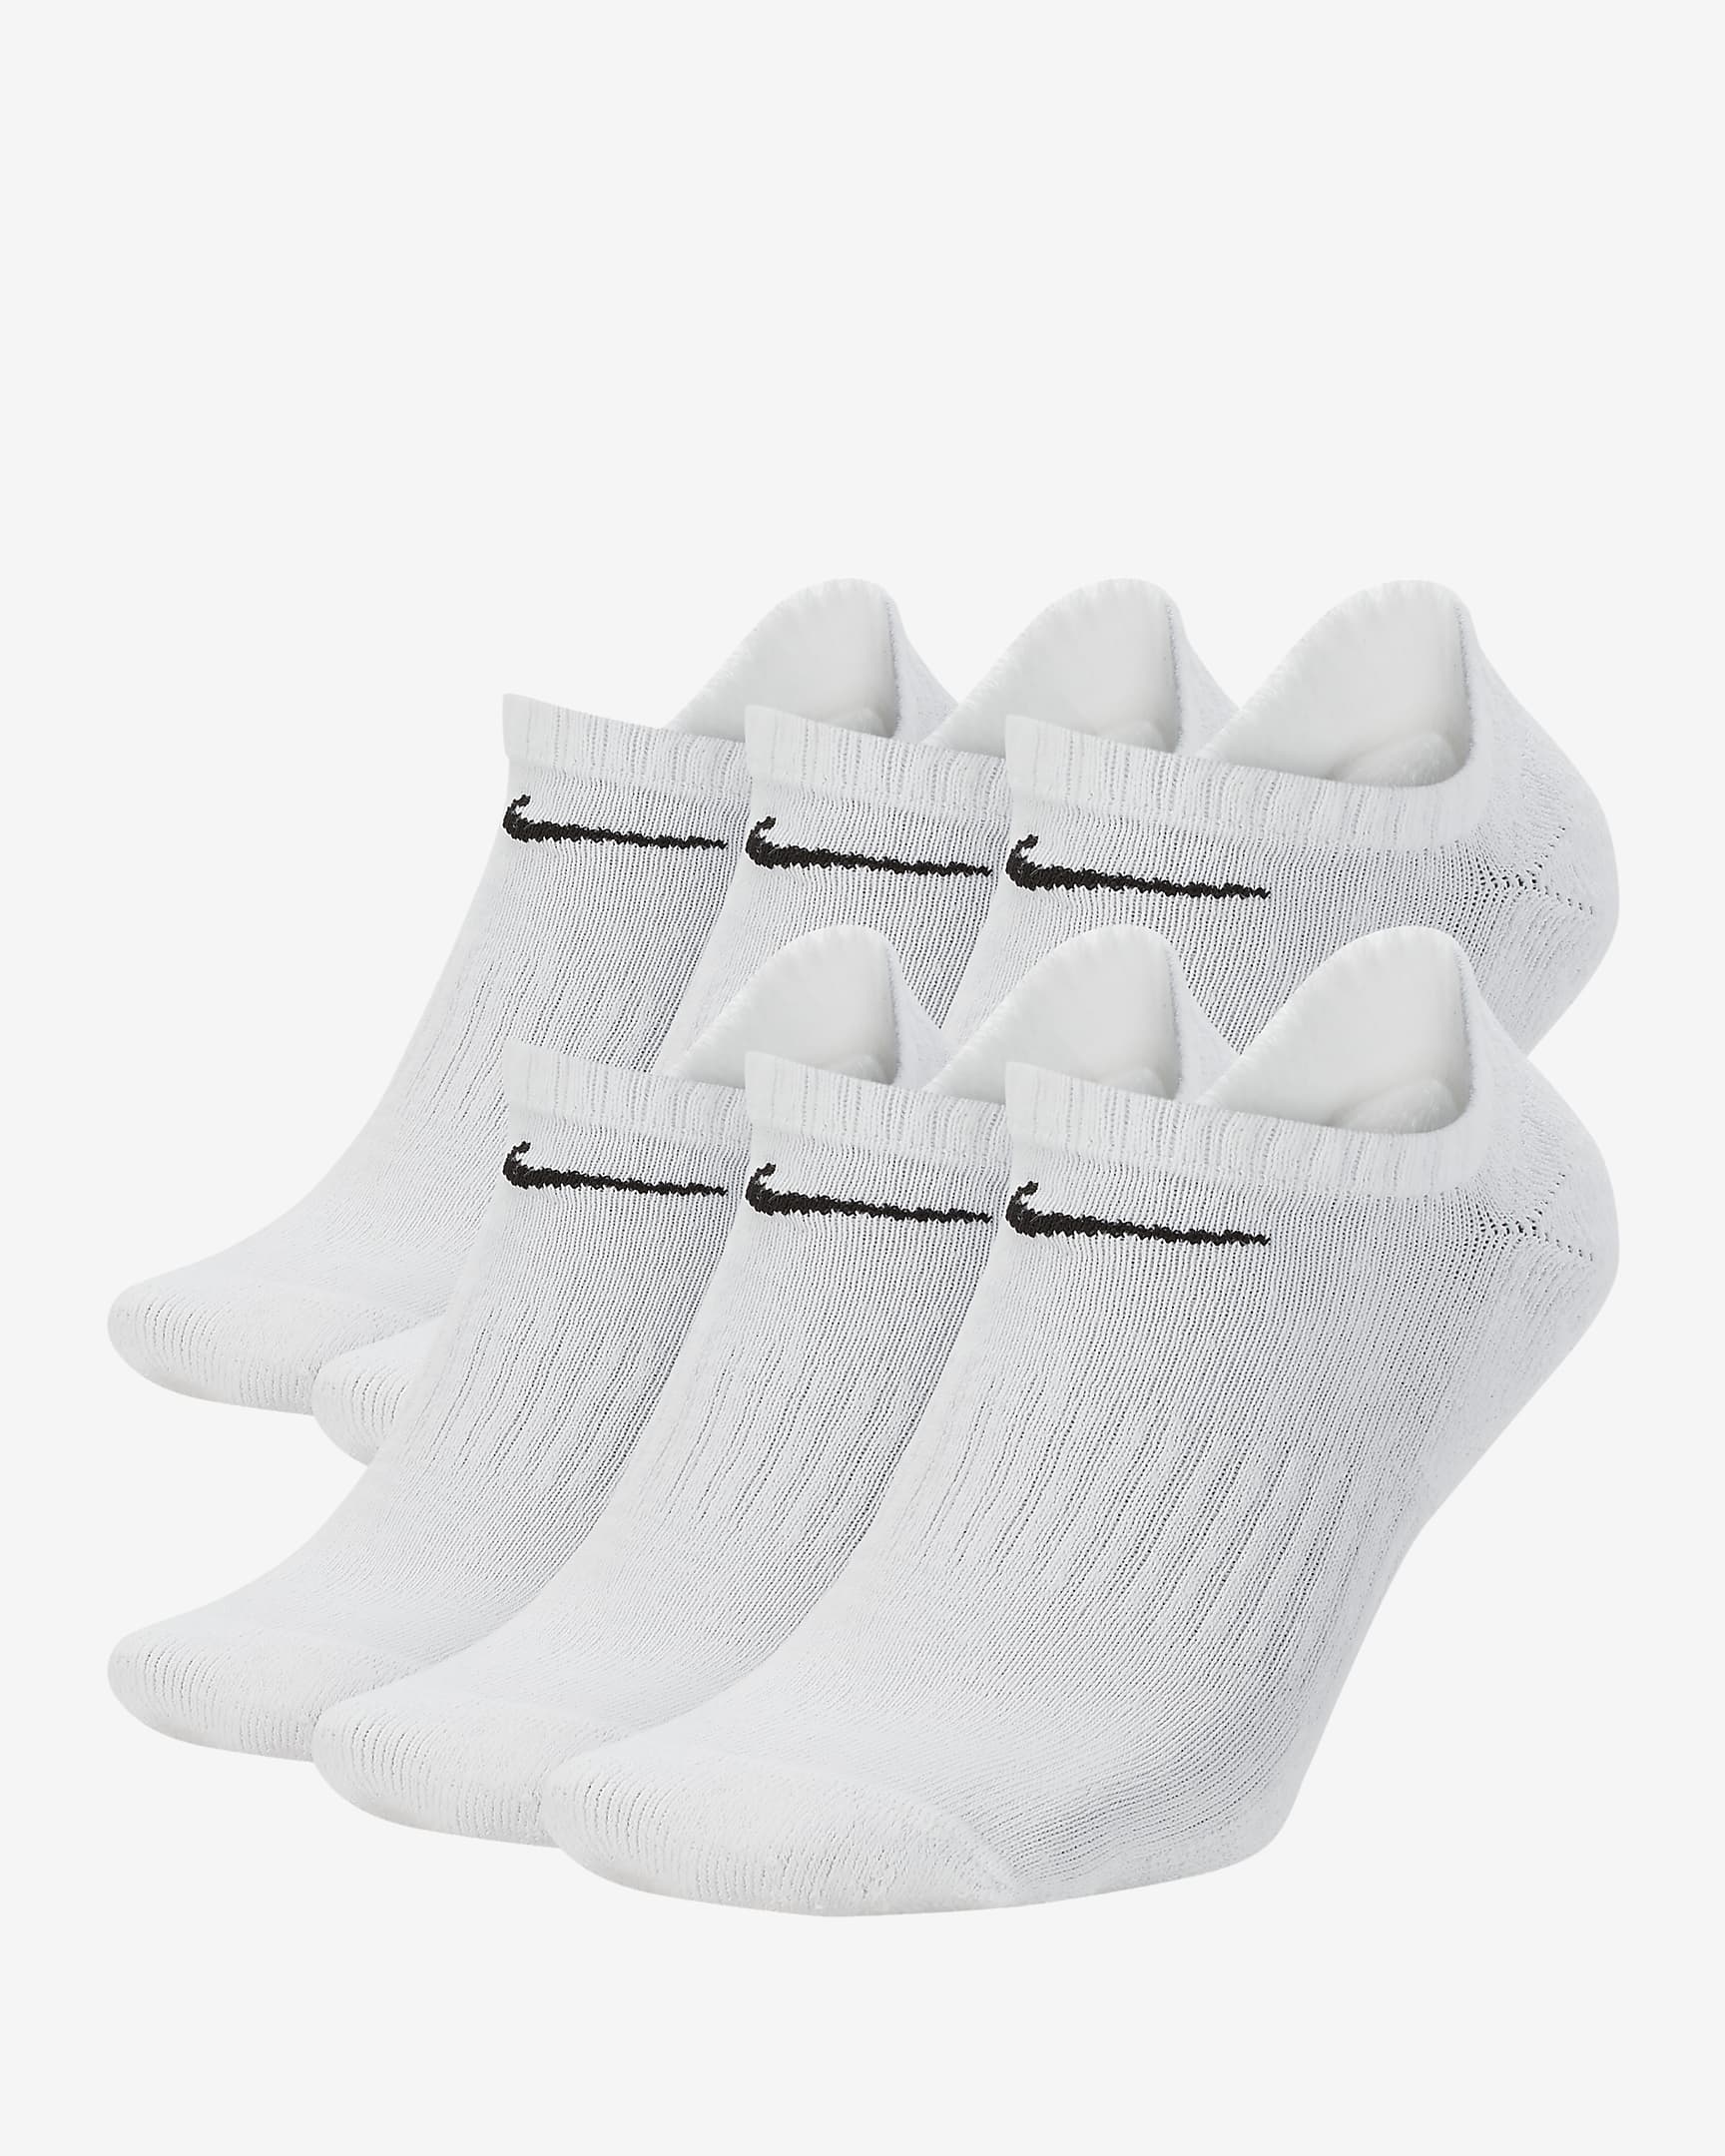 Nike Everyday Cushioned Training No-Show Socks (6 Pairs). Nike DK